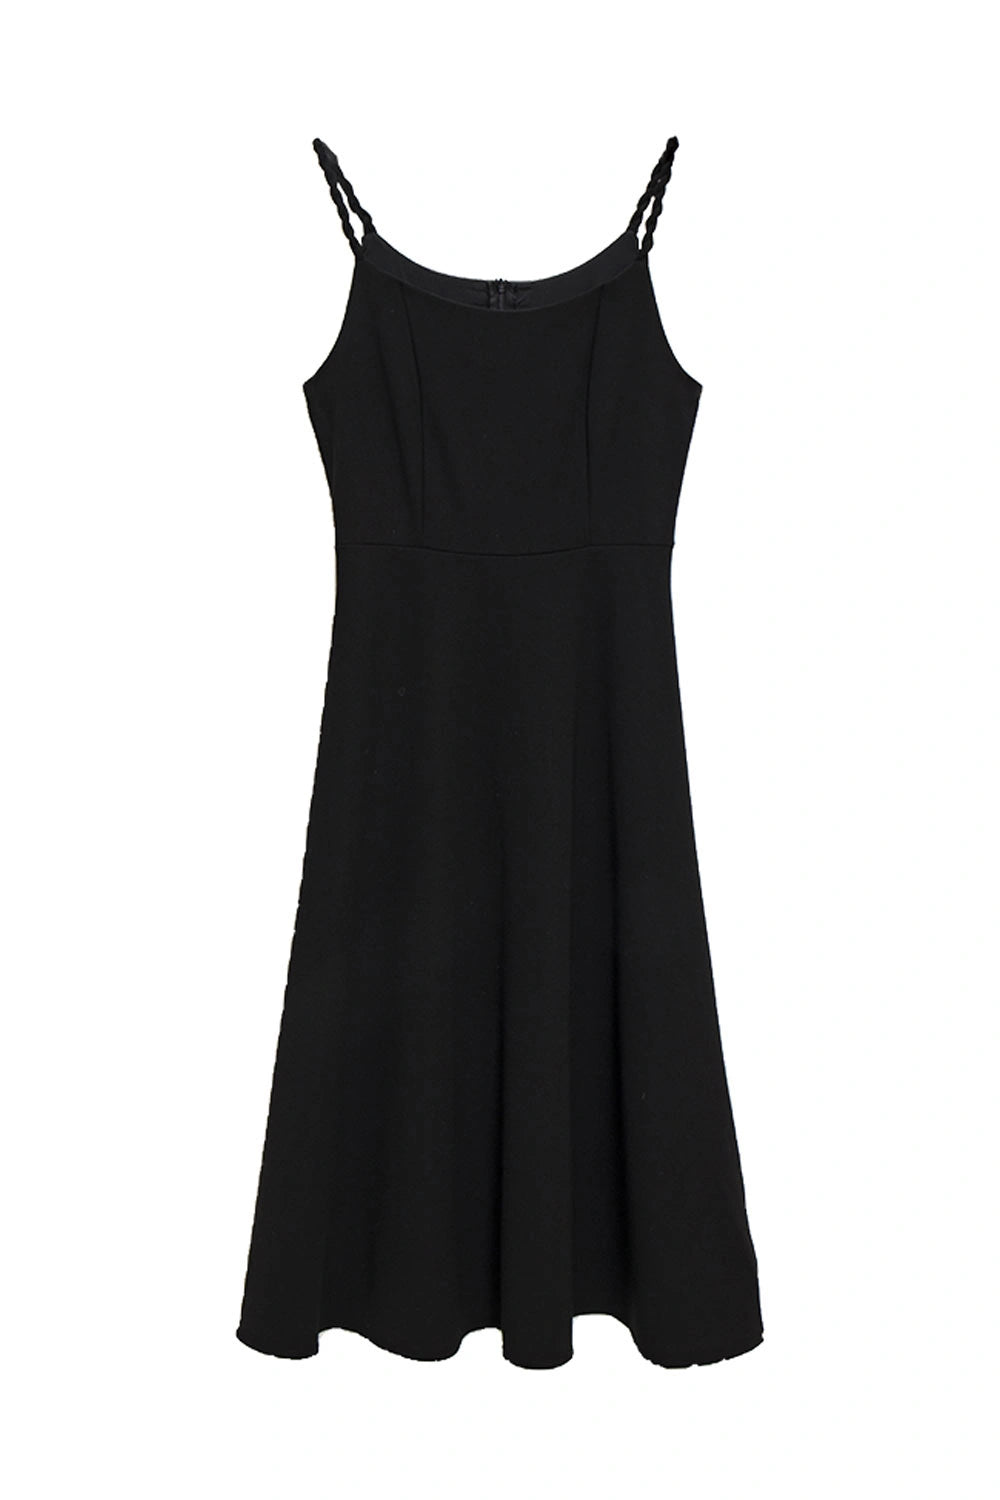 Sleek Black A-Line Dress with Braided Straps - Versatile Evening Wear